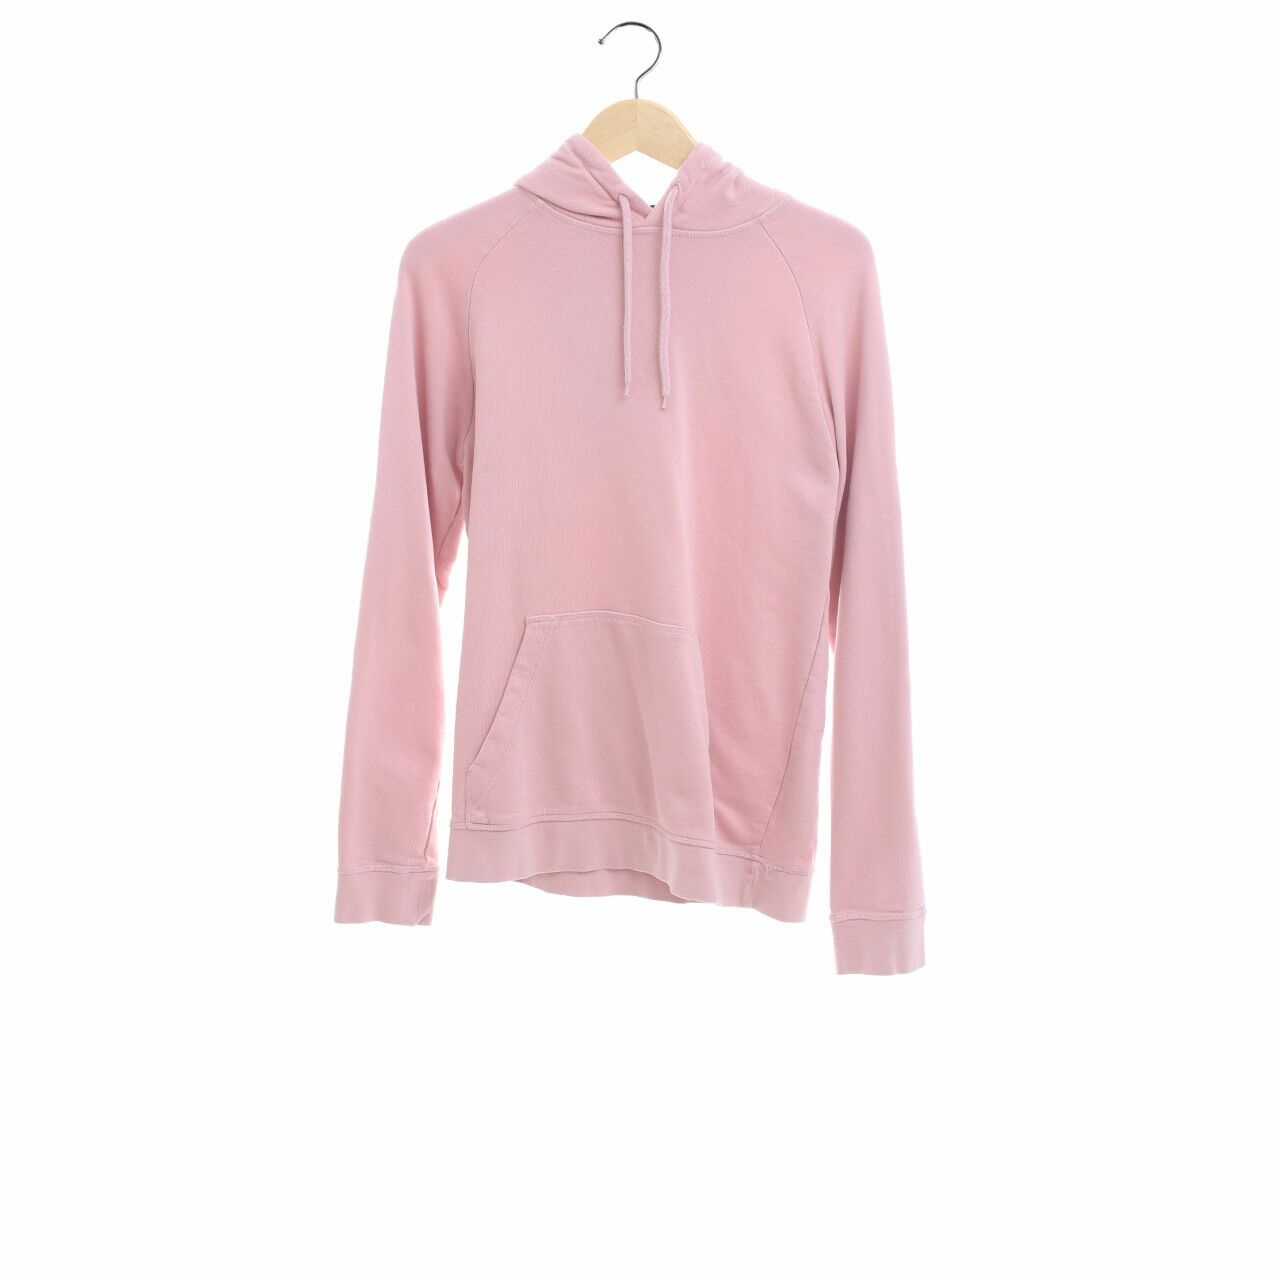 H&M Dusty Pink Sweatshirts Sweater